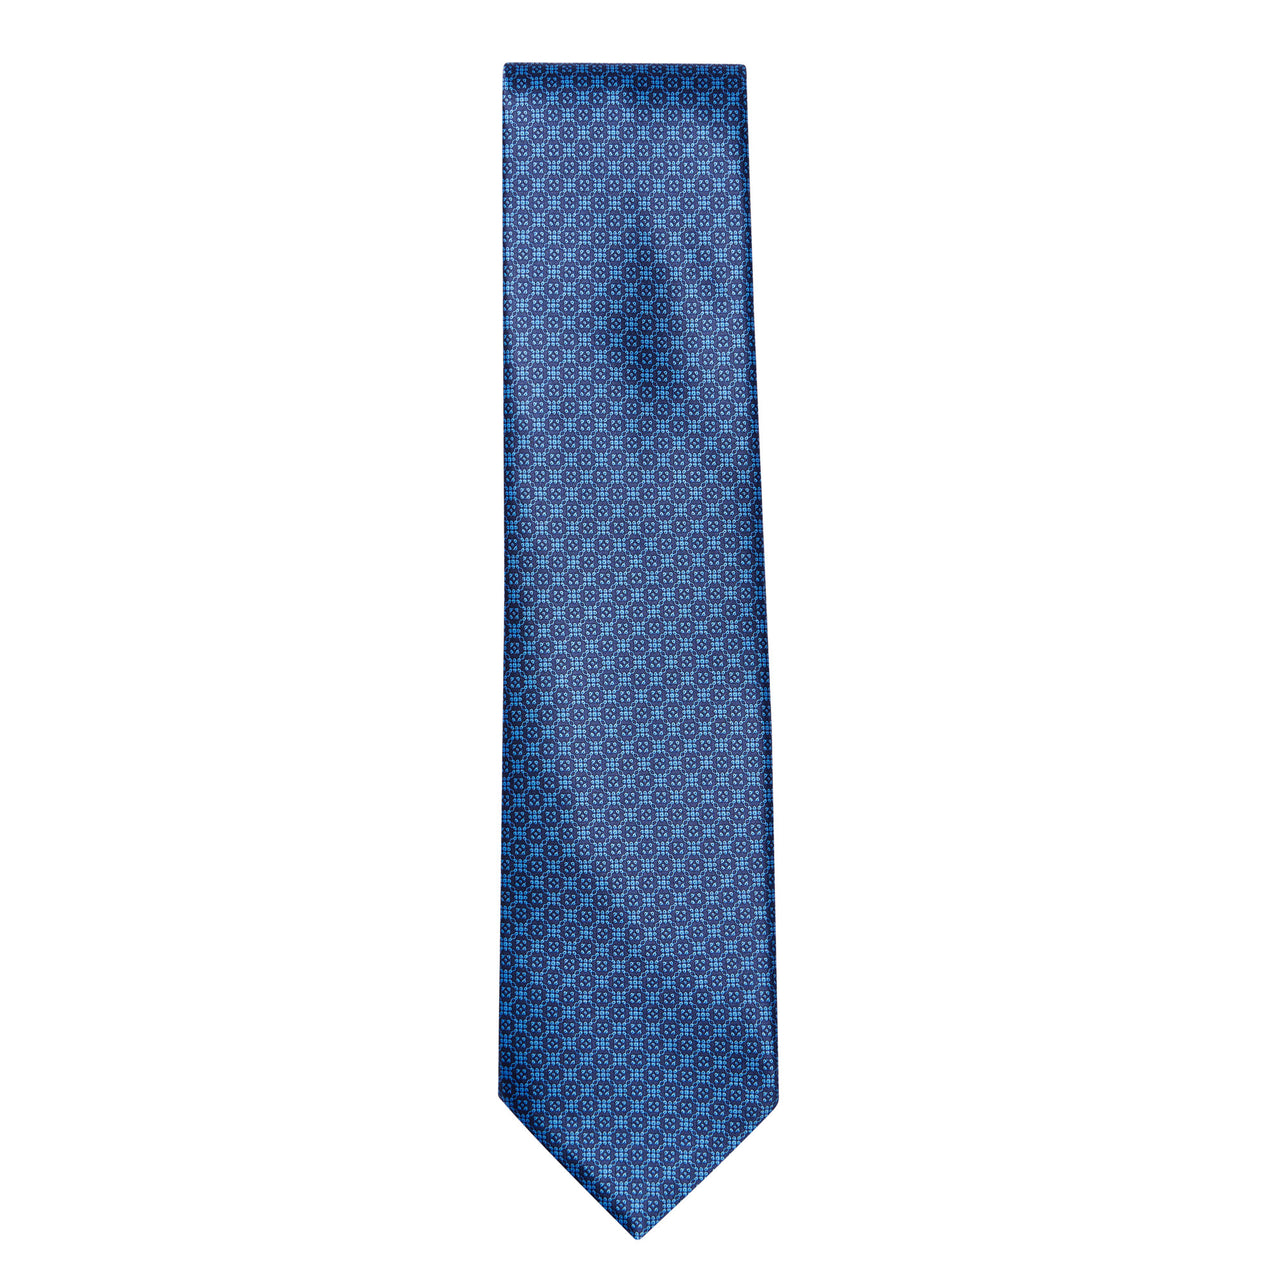 STEFANO RICCI Silk Tie NAVY/BLUE